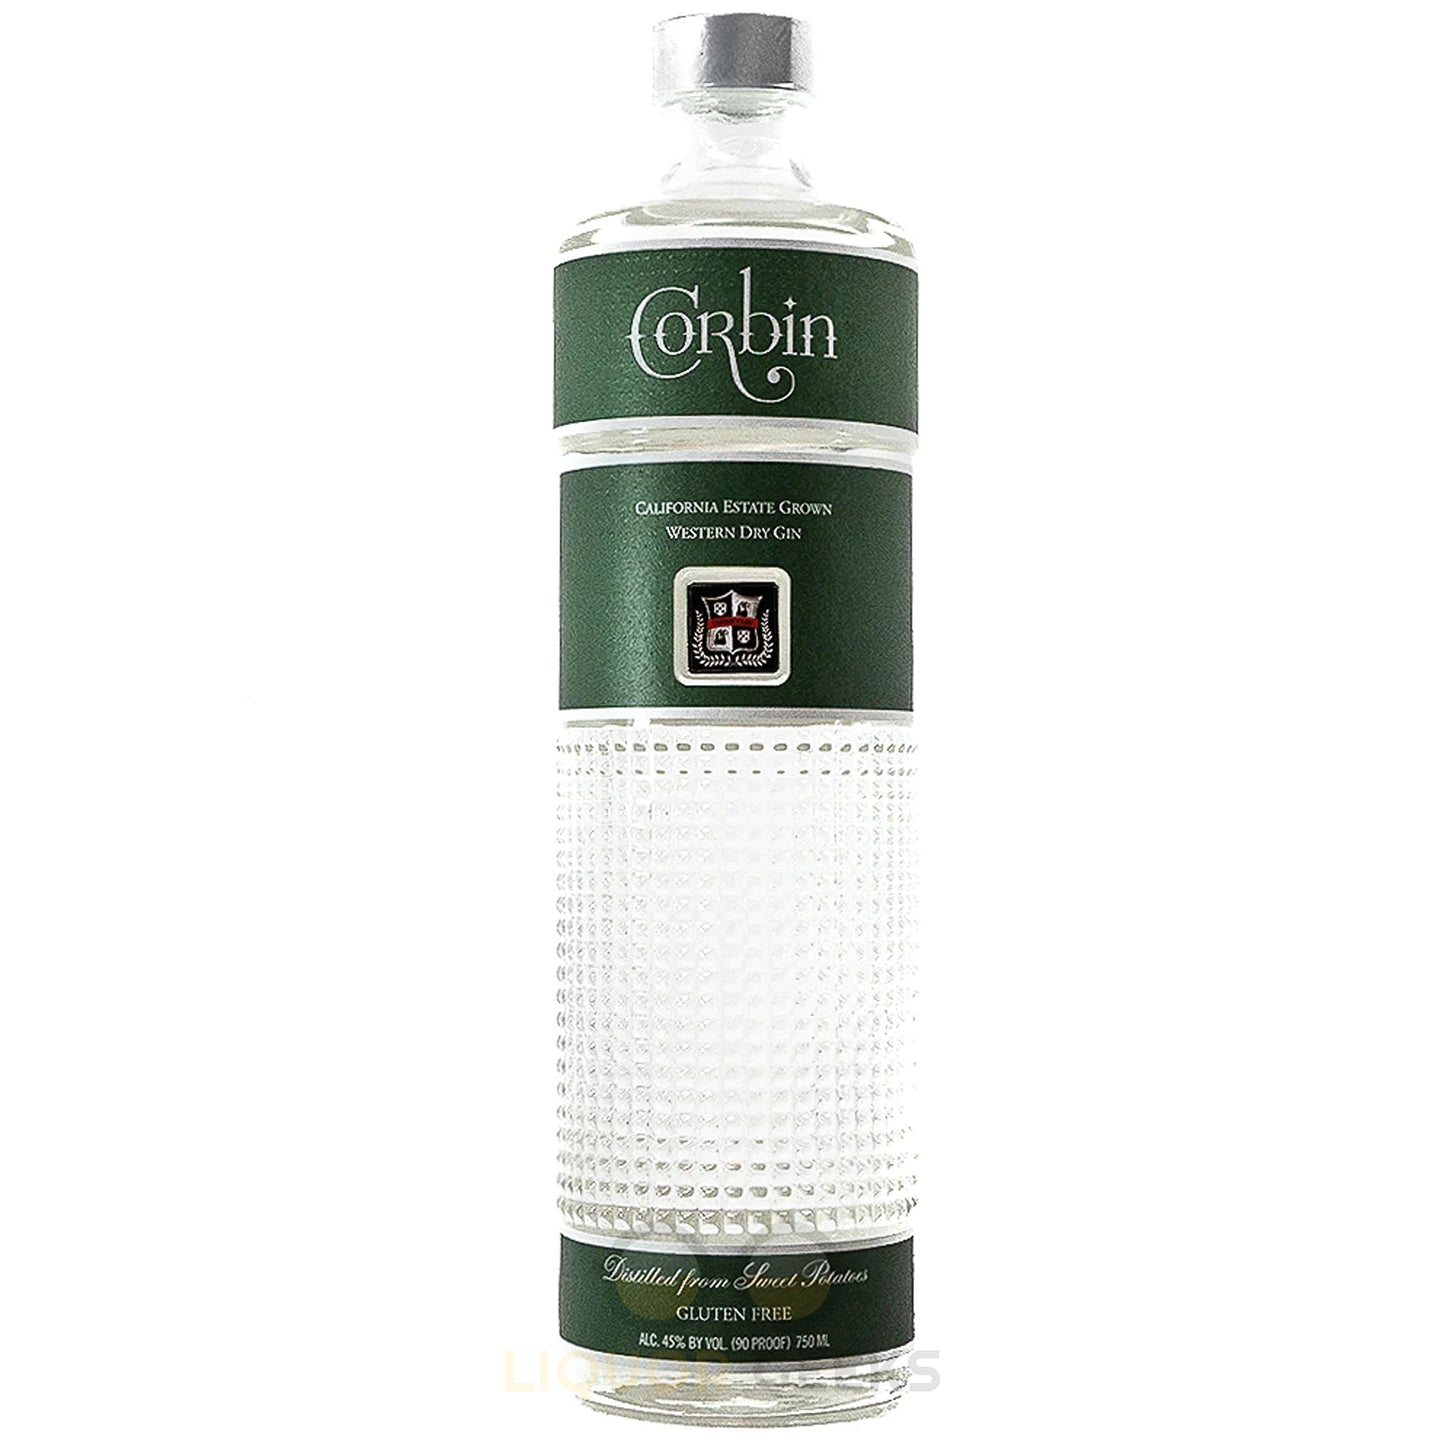 Corbin Western Dry Gin Estate Grown - Liquor Geeks